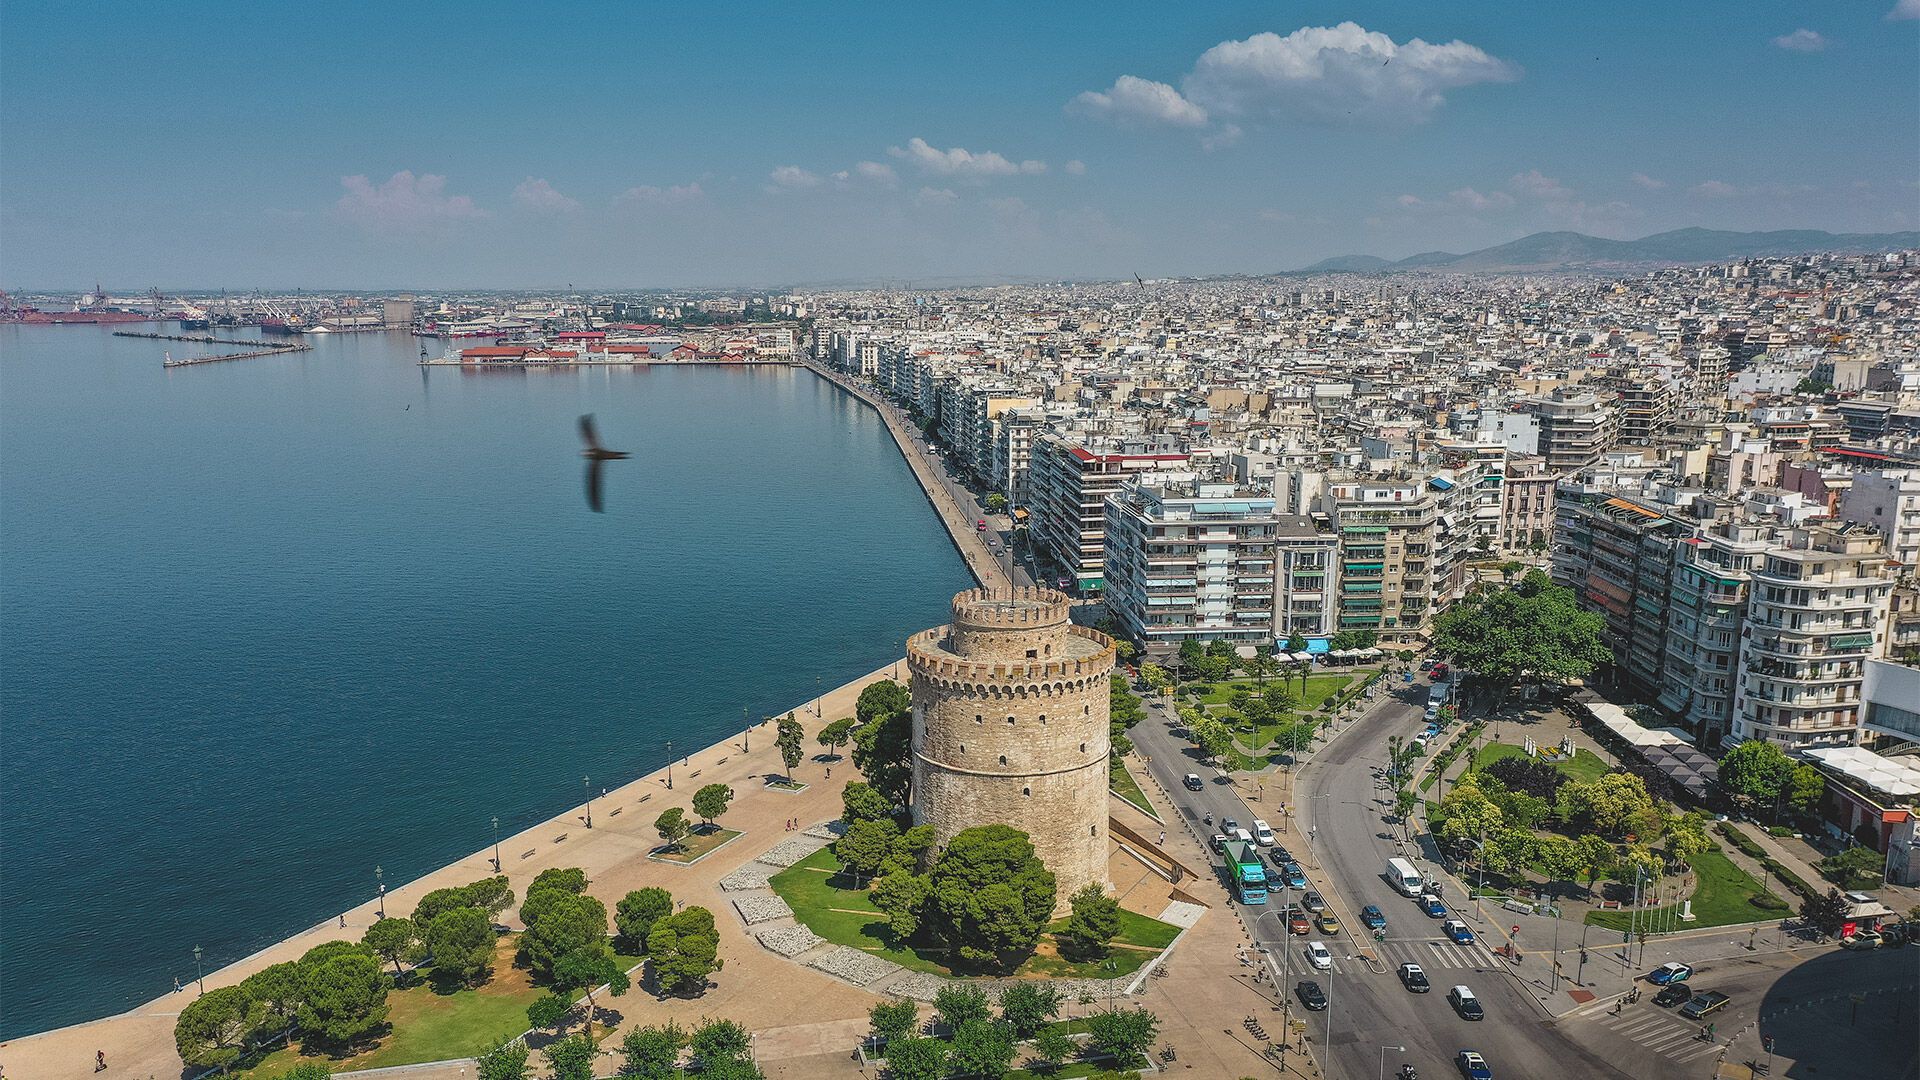 More information about "Επτά (7) μεγάλοι ξενοδοχειακοί όμιλοι επενδύουν στην Θεσσαλονίκη"